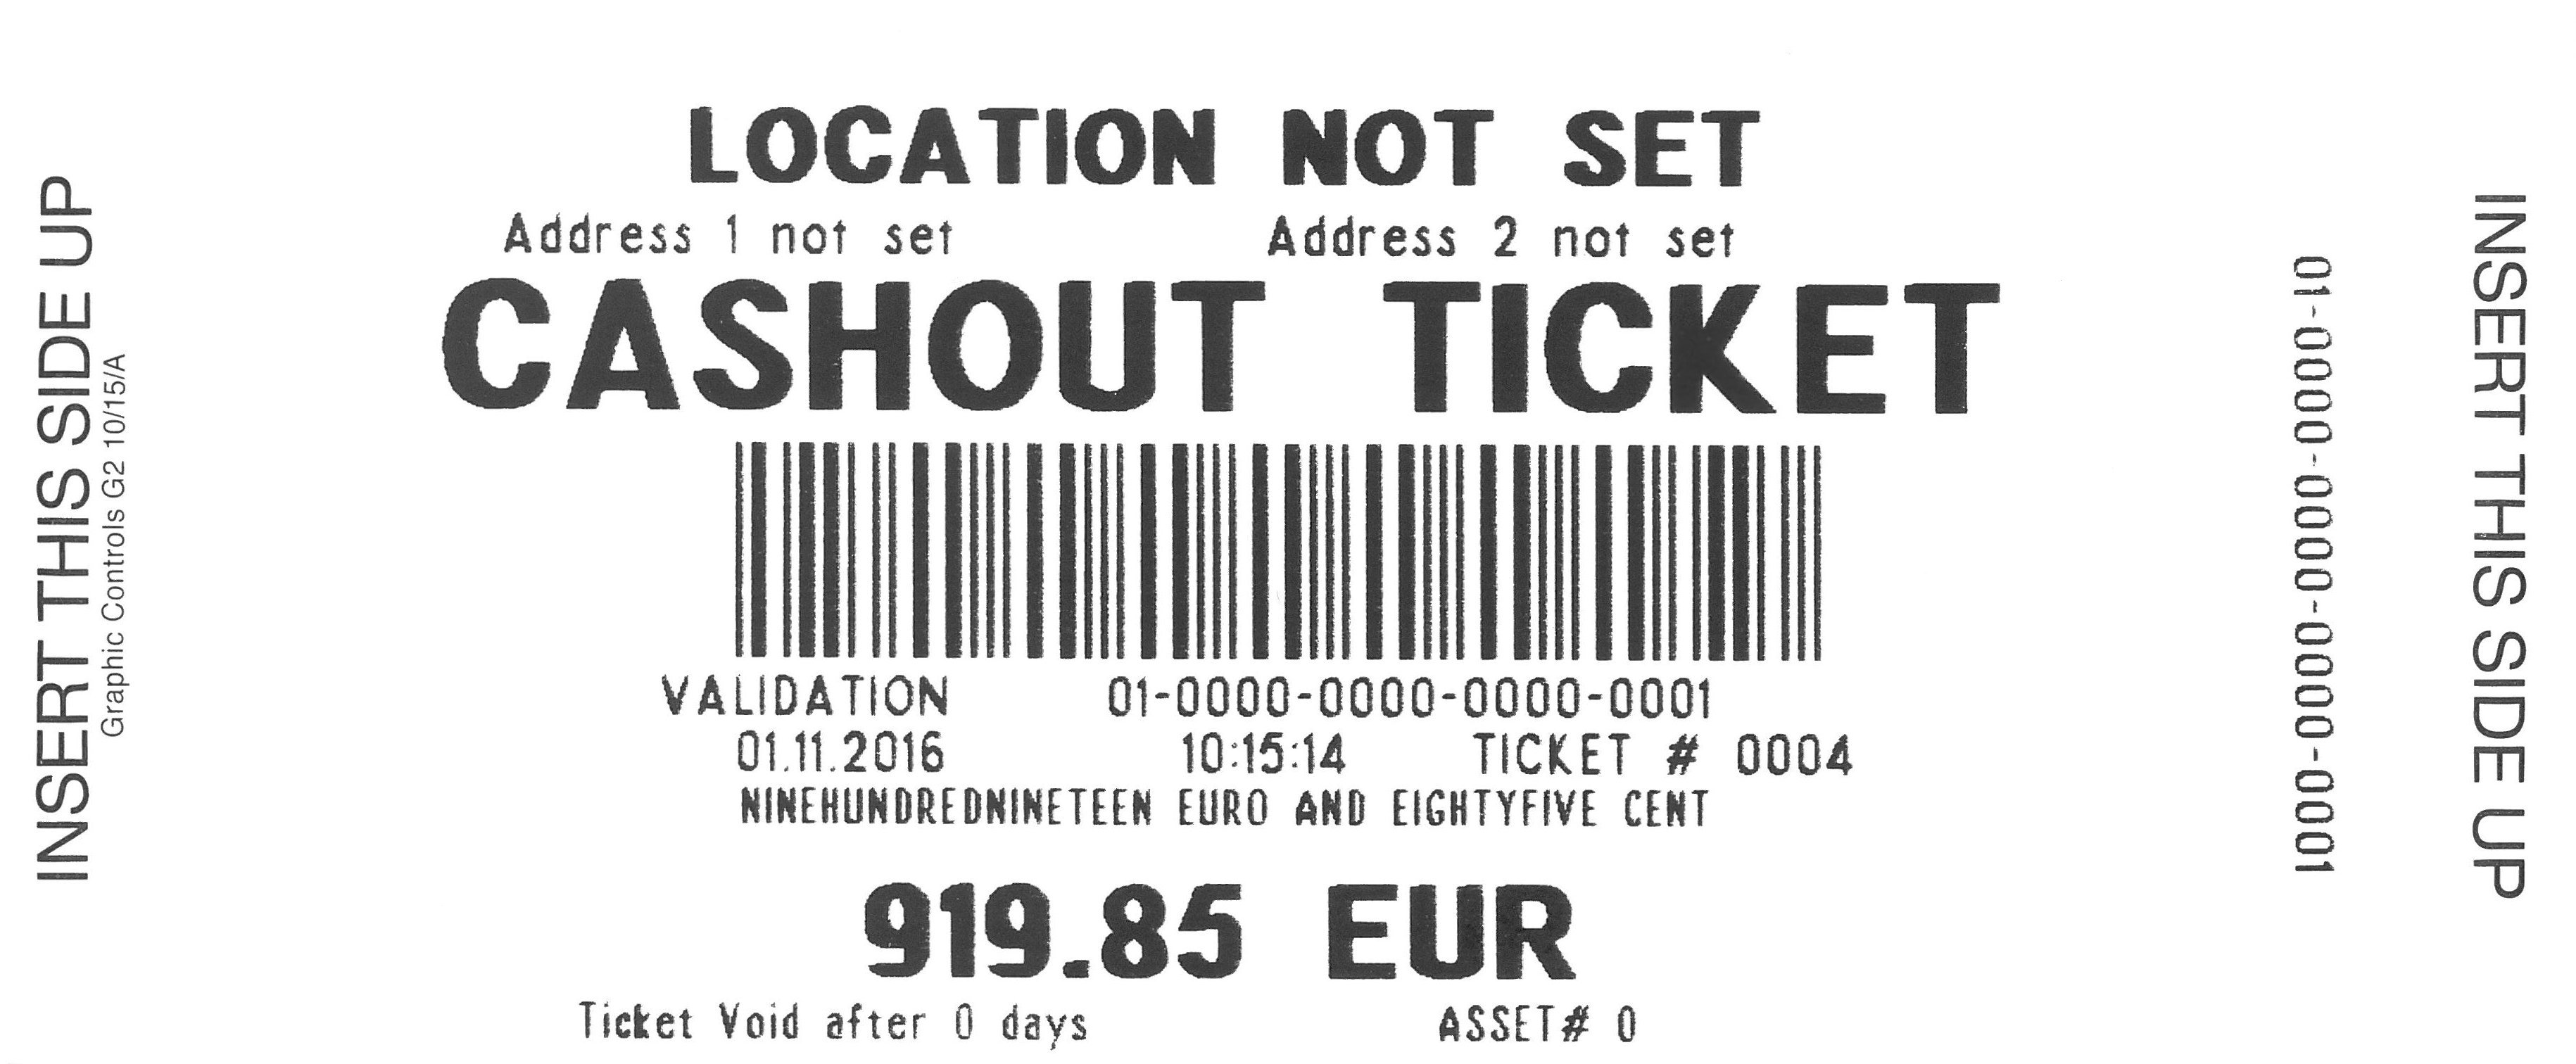 File:Casino Caschout Ticket Template.jpg - Wikimedia Commons